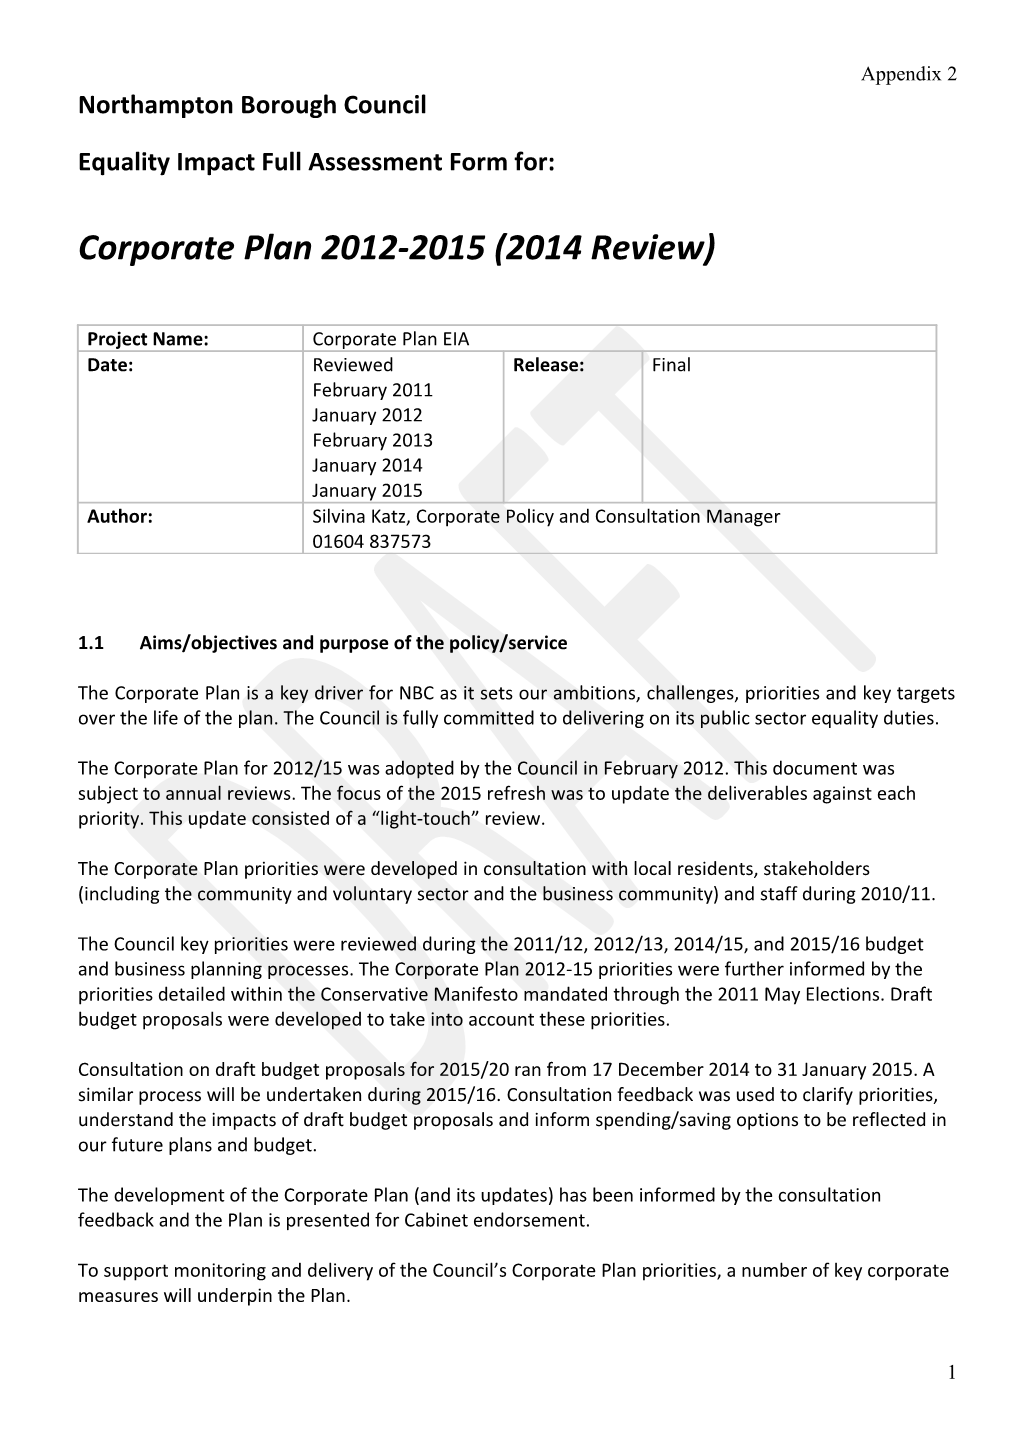 Corporate Plan EIA